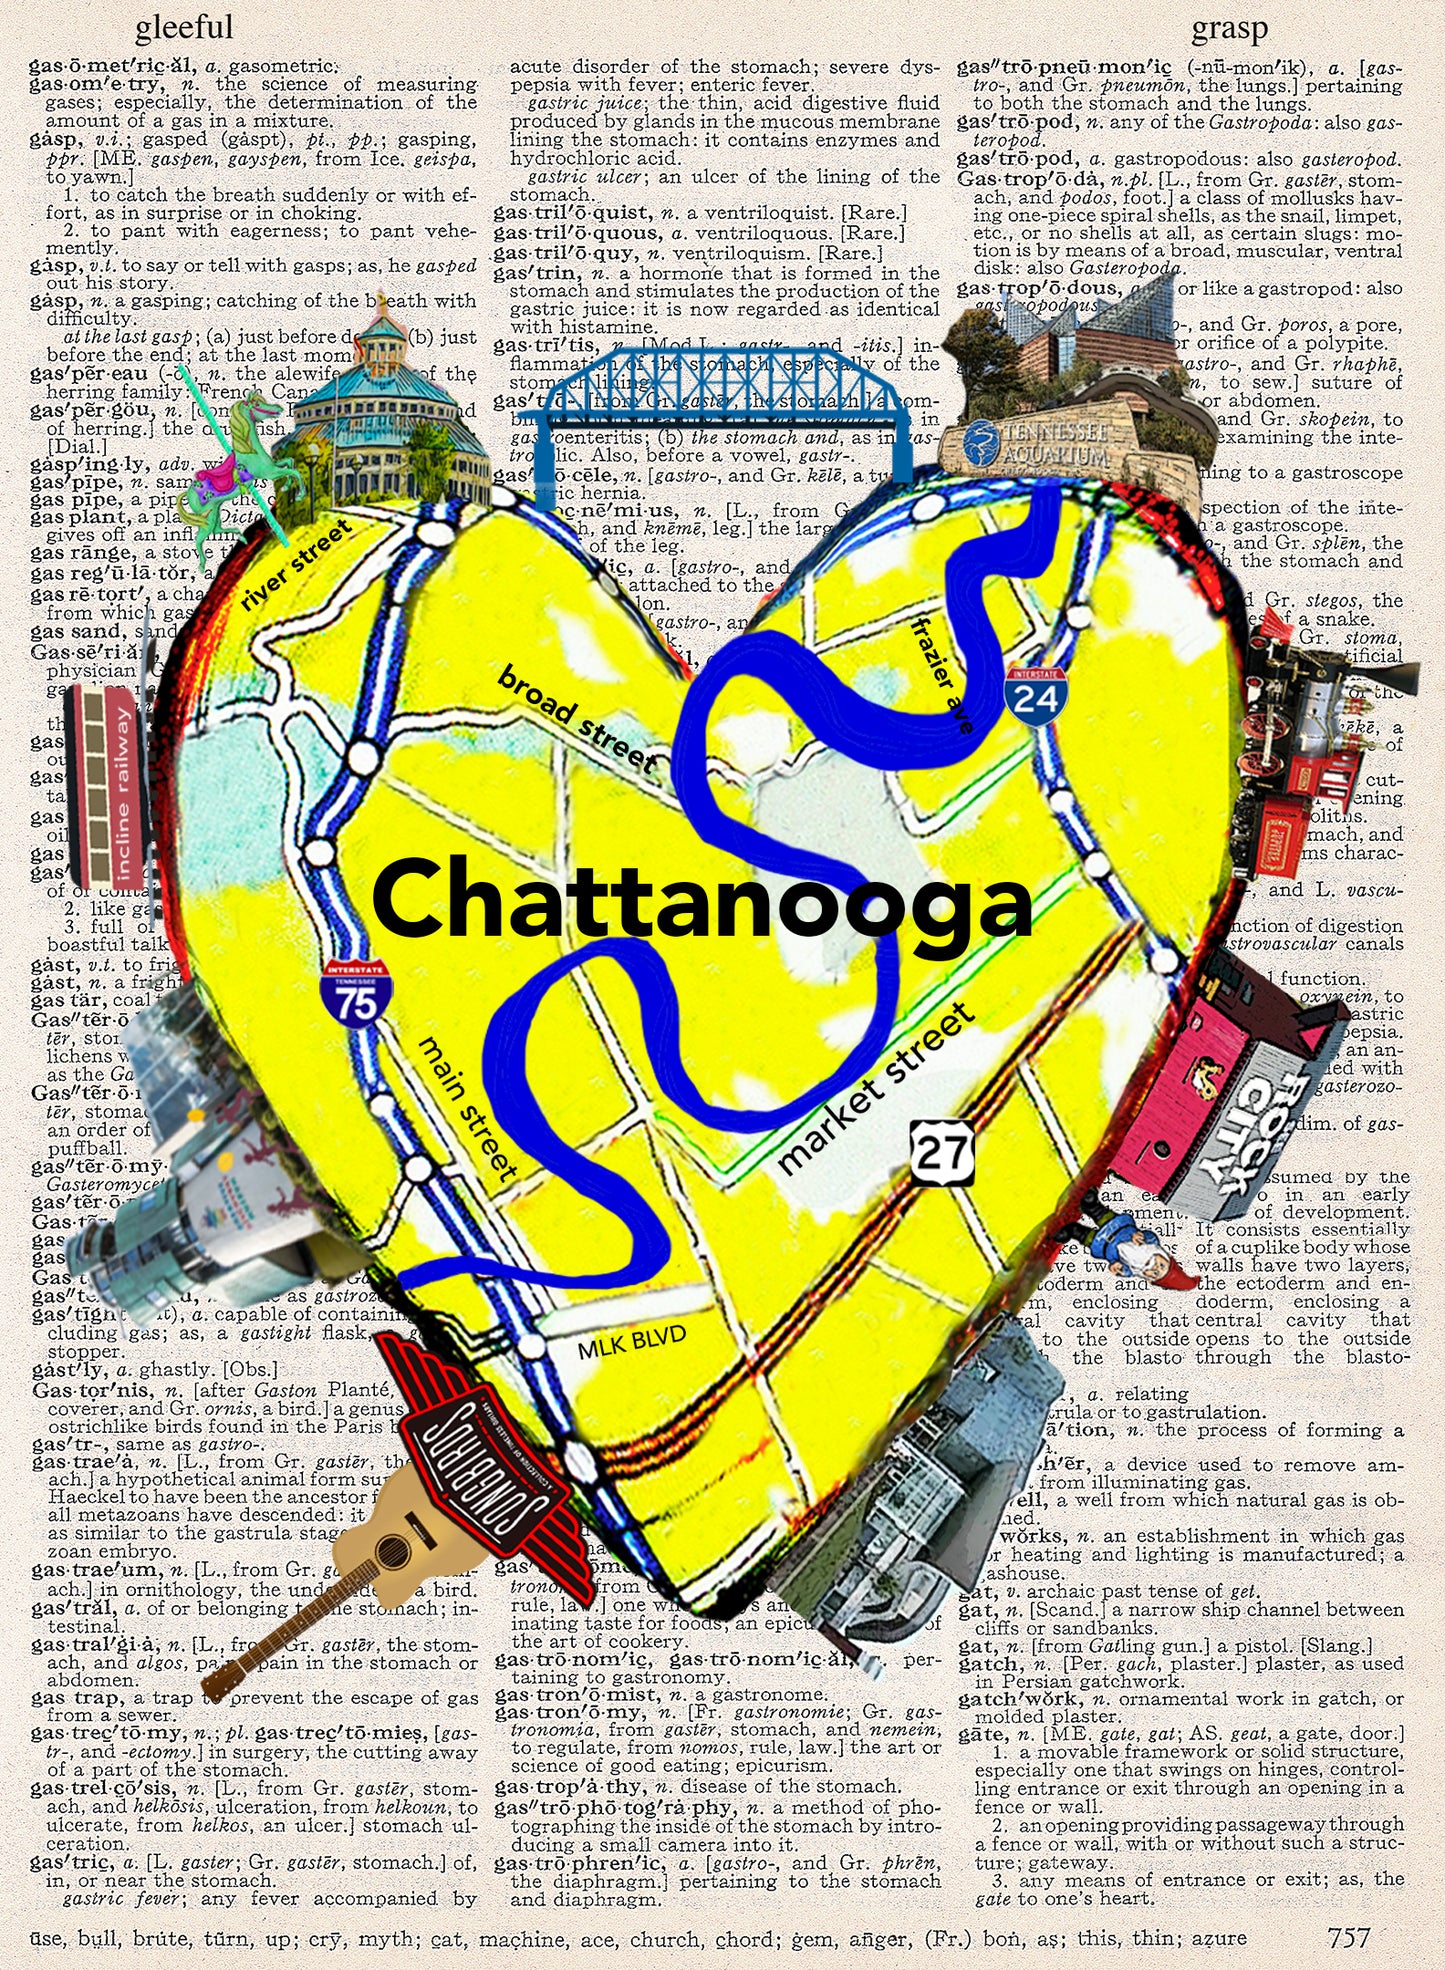 CHATTANOOGA HEART PRINT